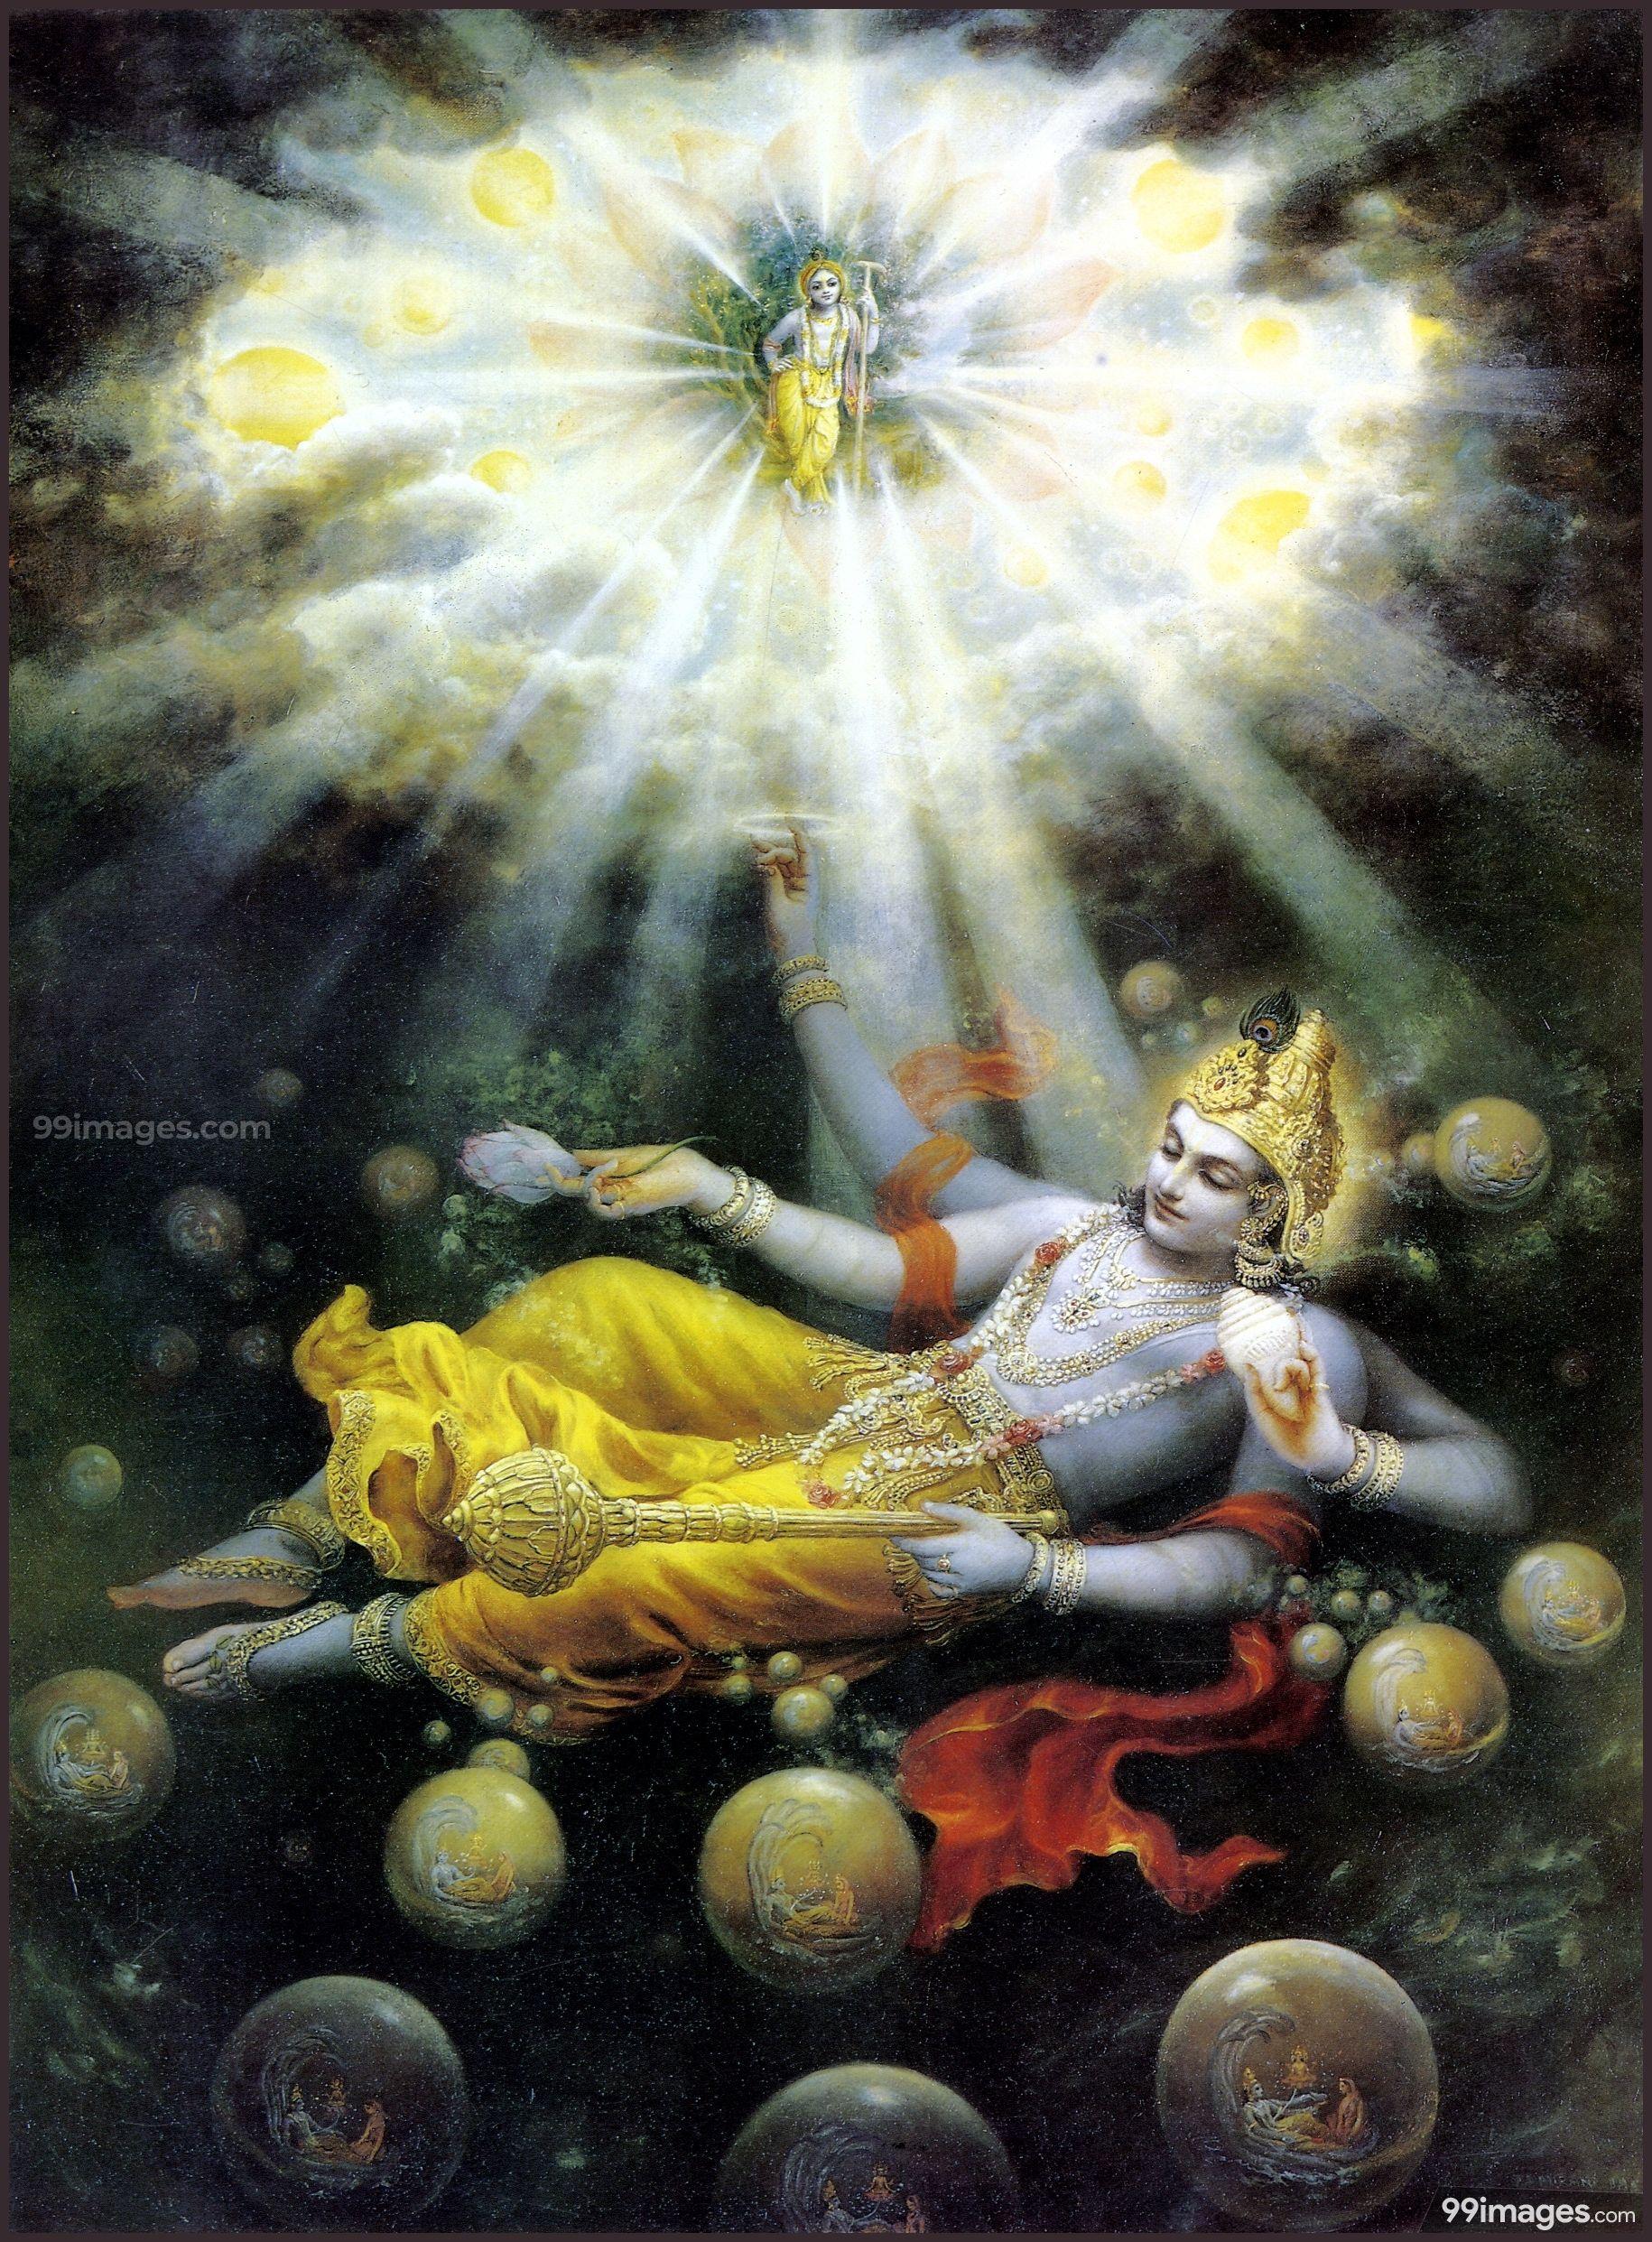 Lord Vishnu HD Image (1080p). Hindu art, Vishnu, Lord vishnu